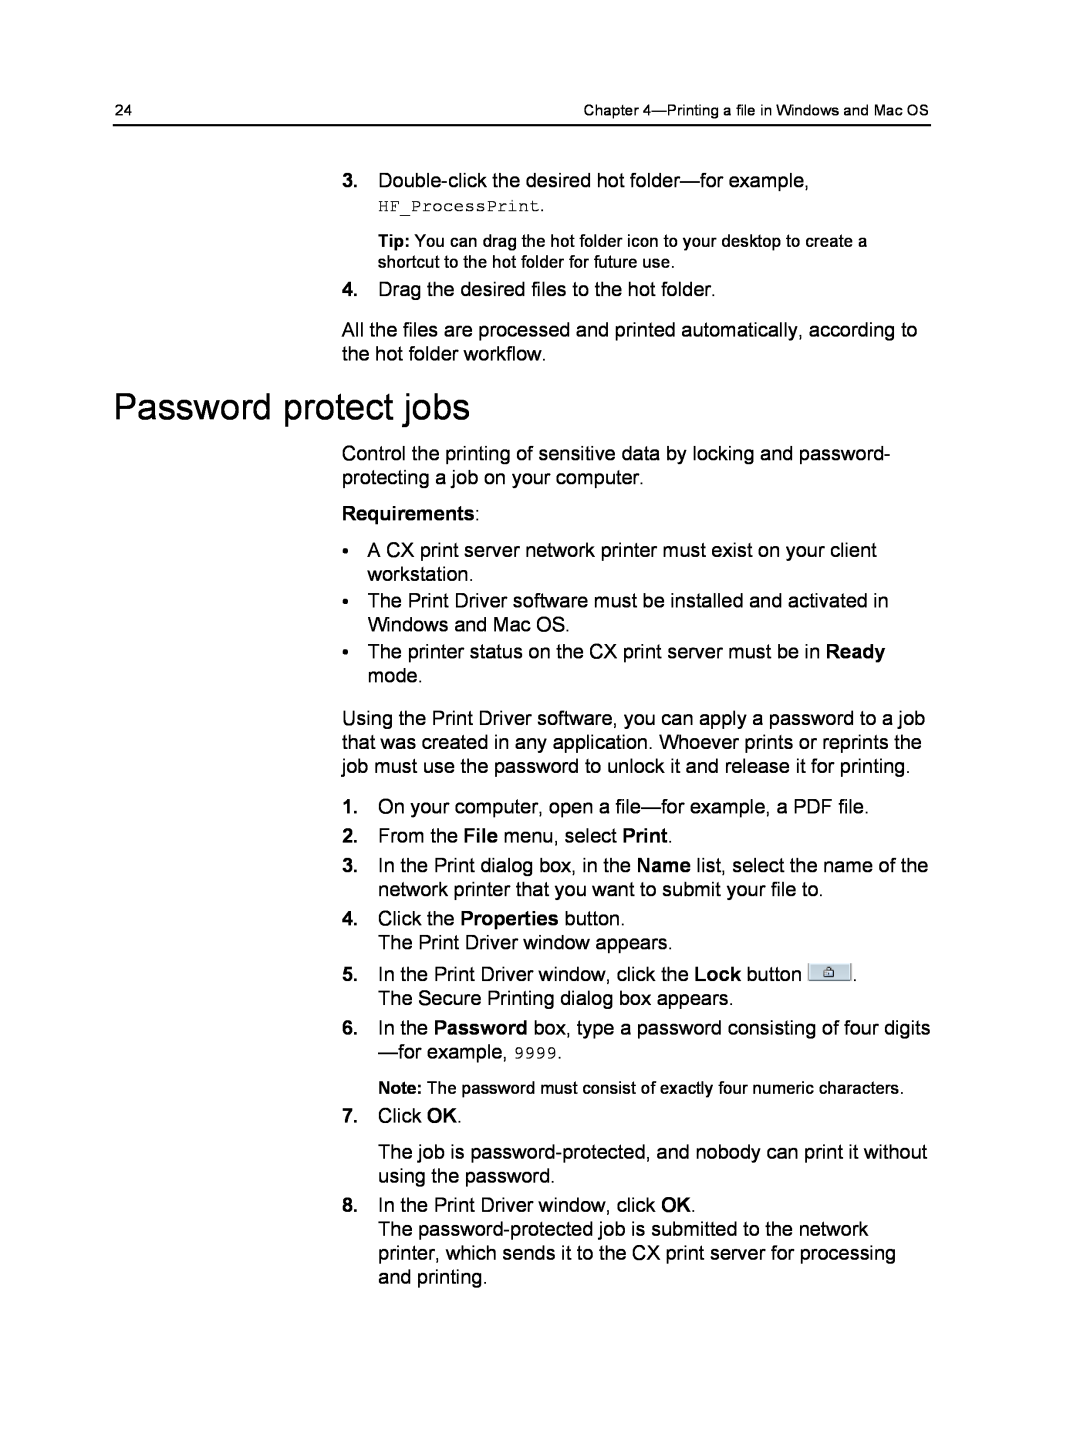 Xerox 560, 550 manual Password protect jobs, Requirements 